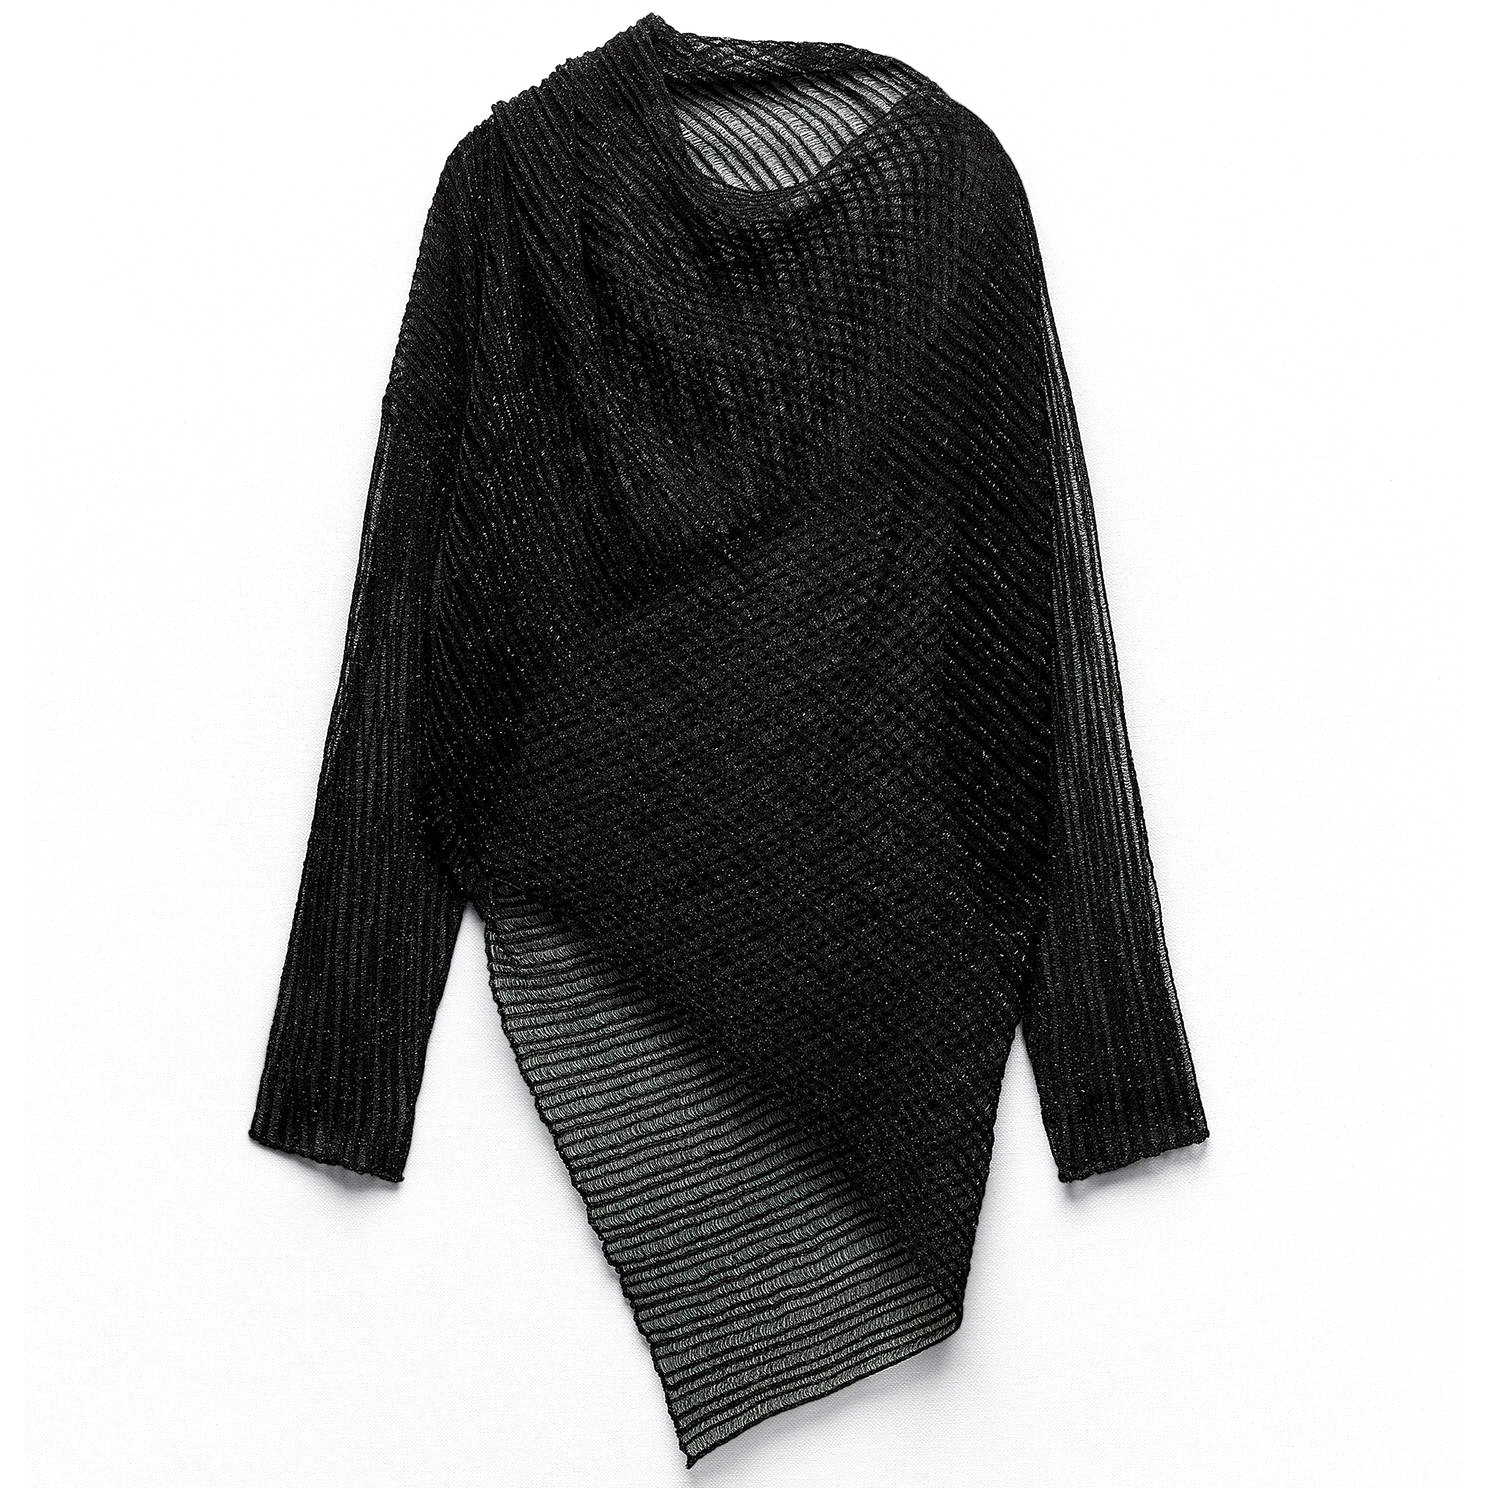 Топ Zara Asymmetric Knit, черный топ zara asymmetric ribbed черный